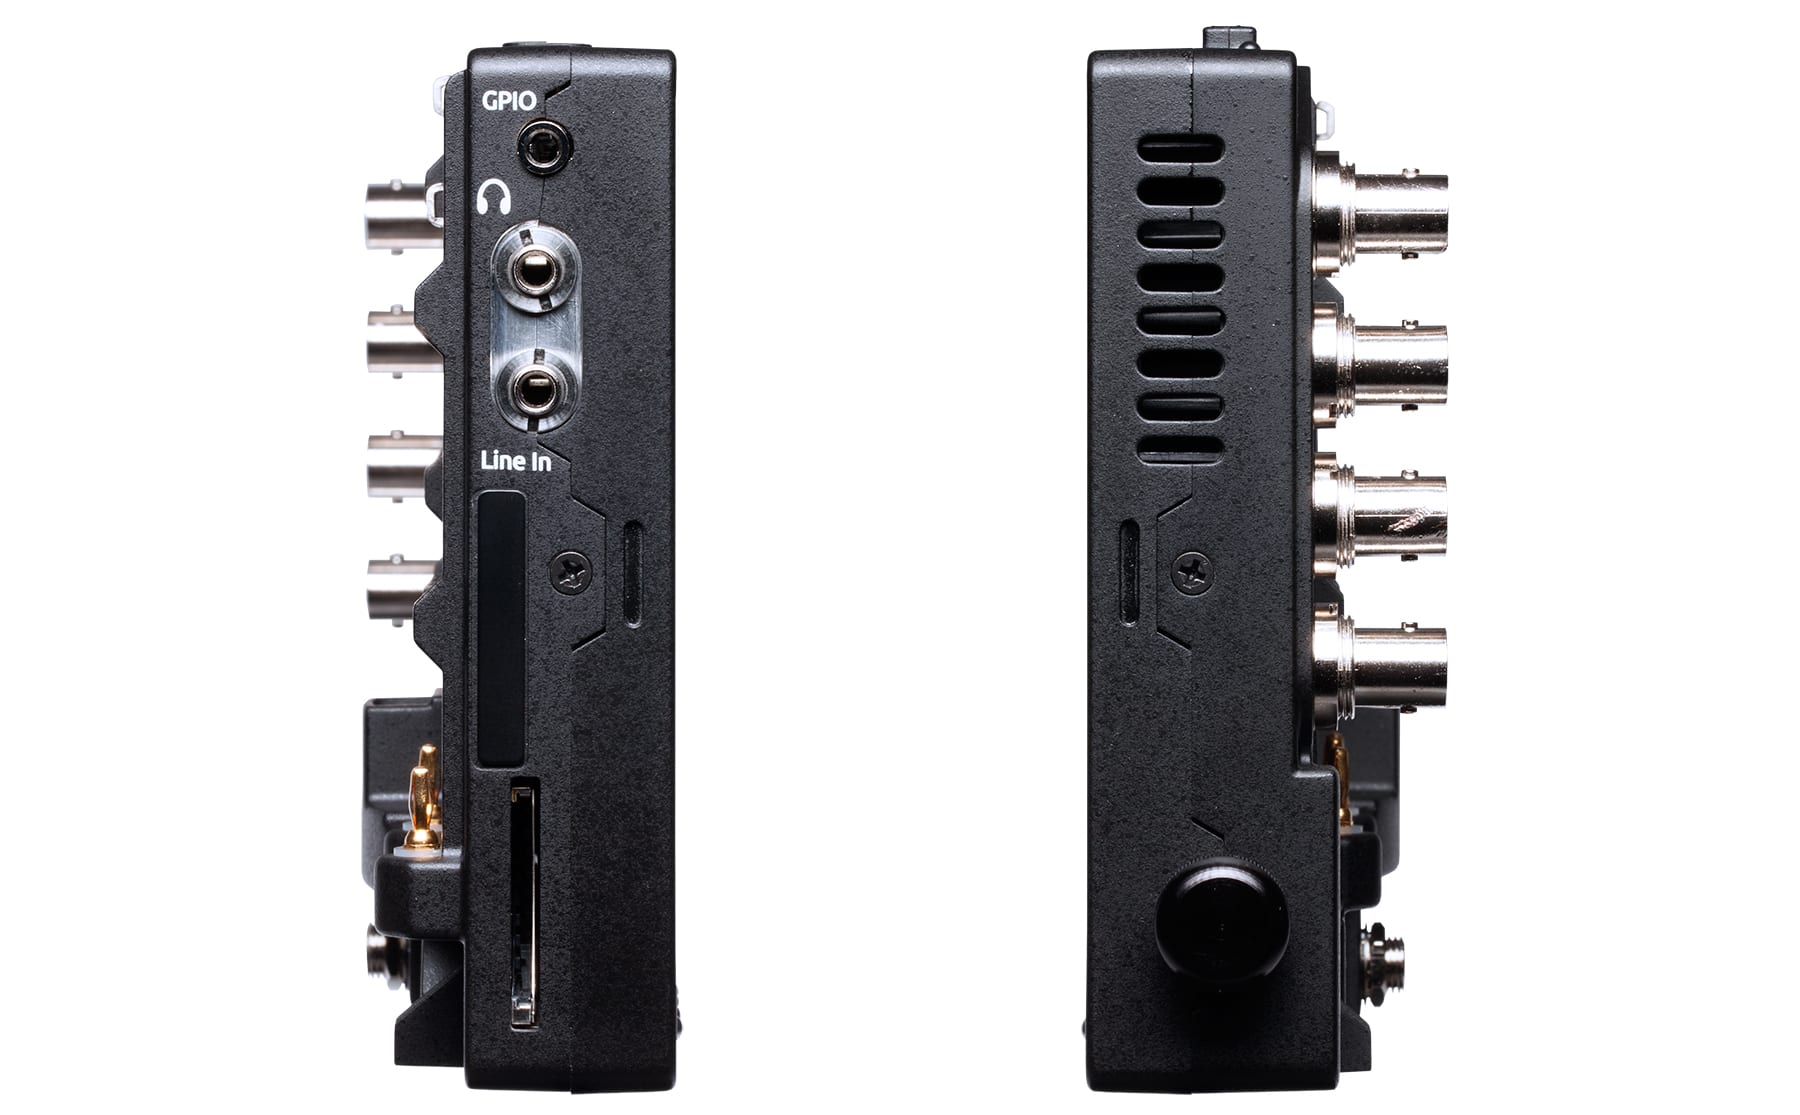 Video Devices PIX-LR XLR Audio Interface for PIX-E5 / E7